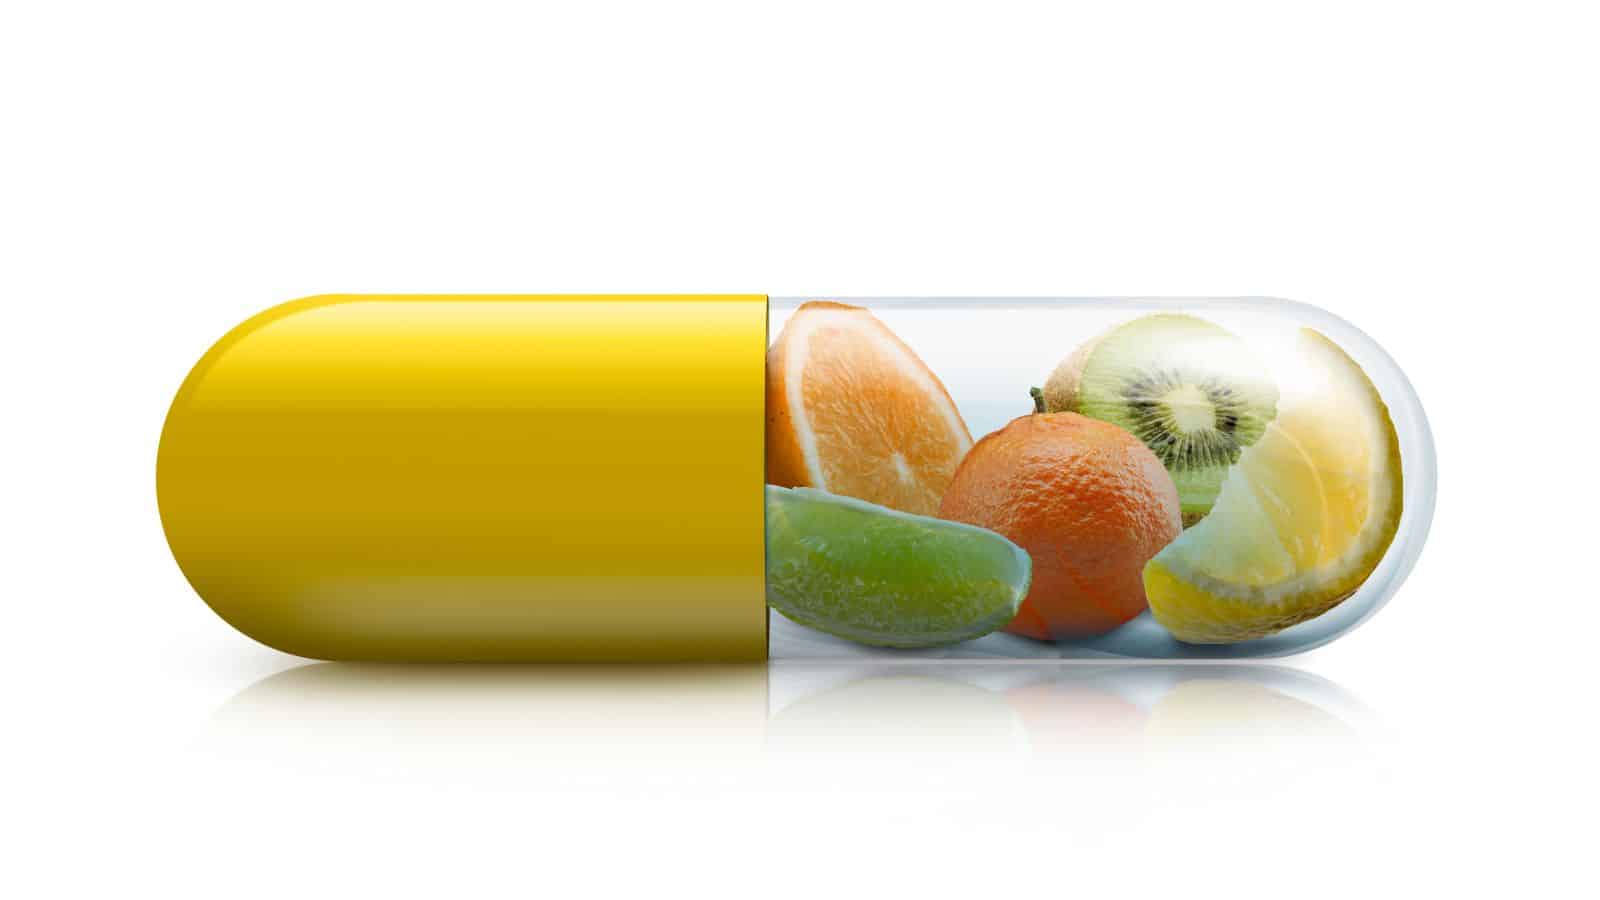 Vitamin capsule with citrus fruits inside.
